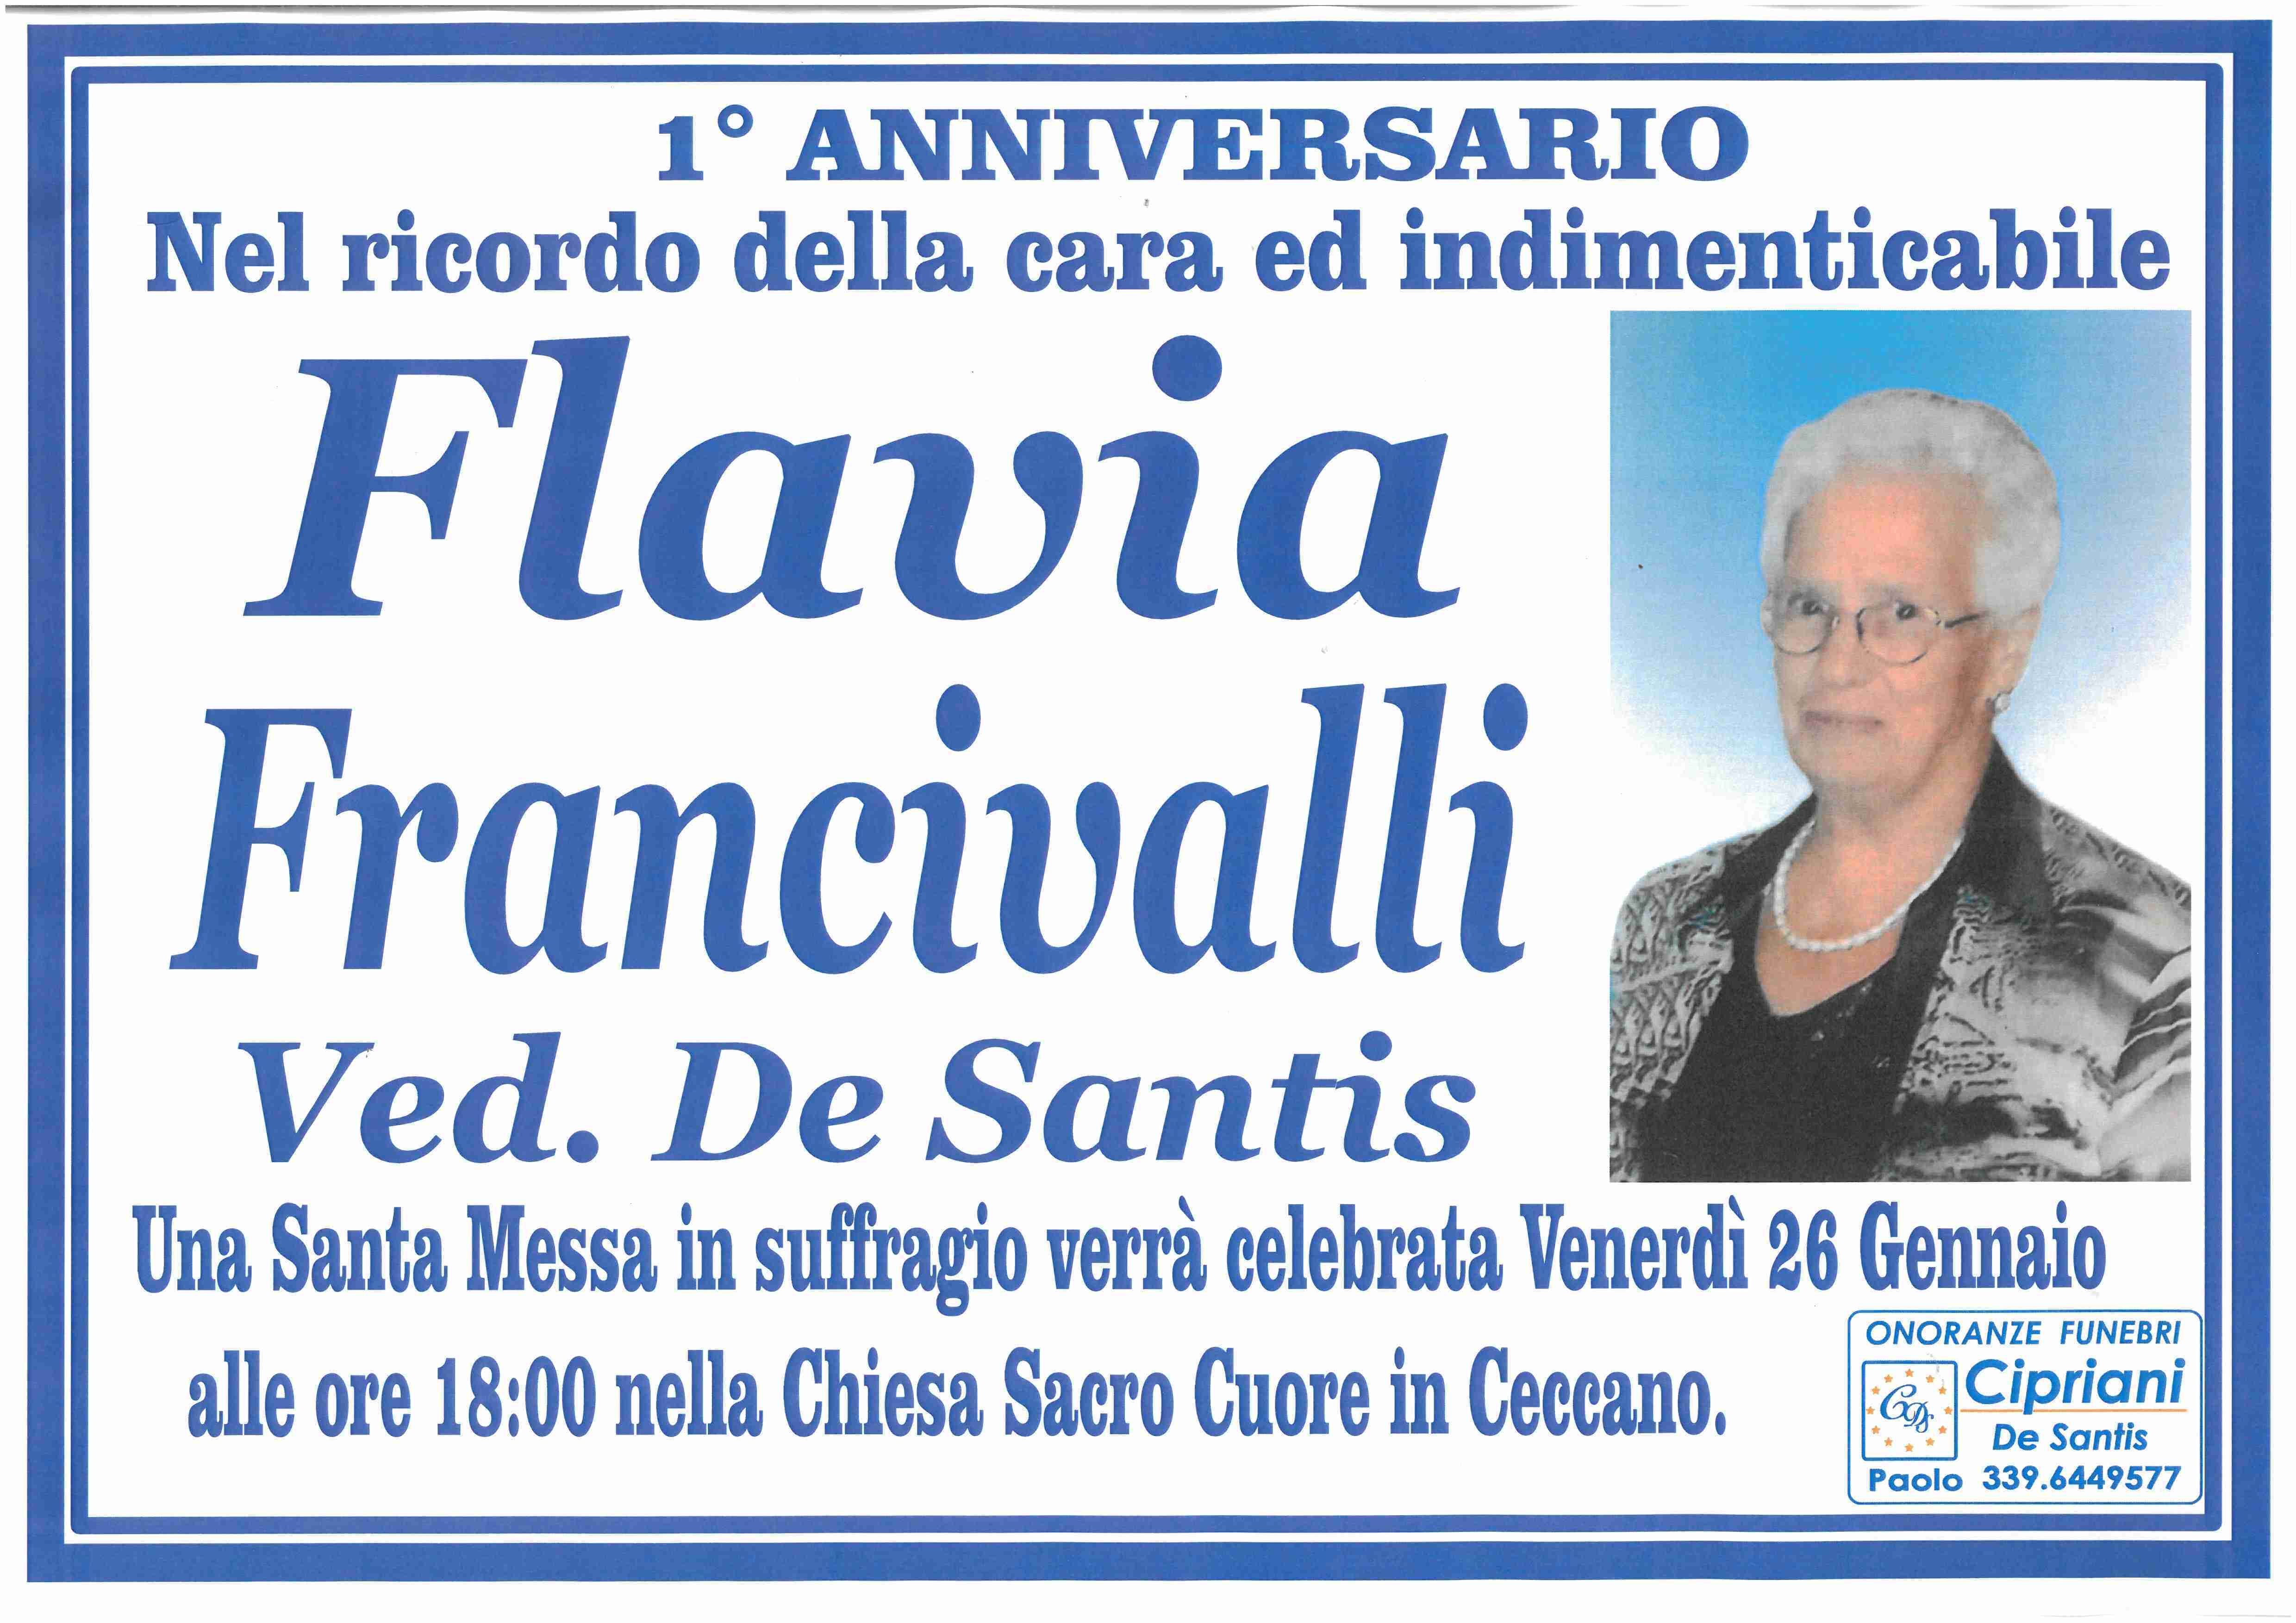 Flavia Francivalli